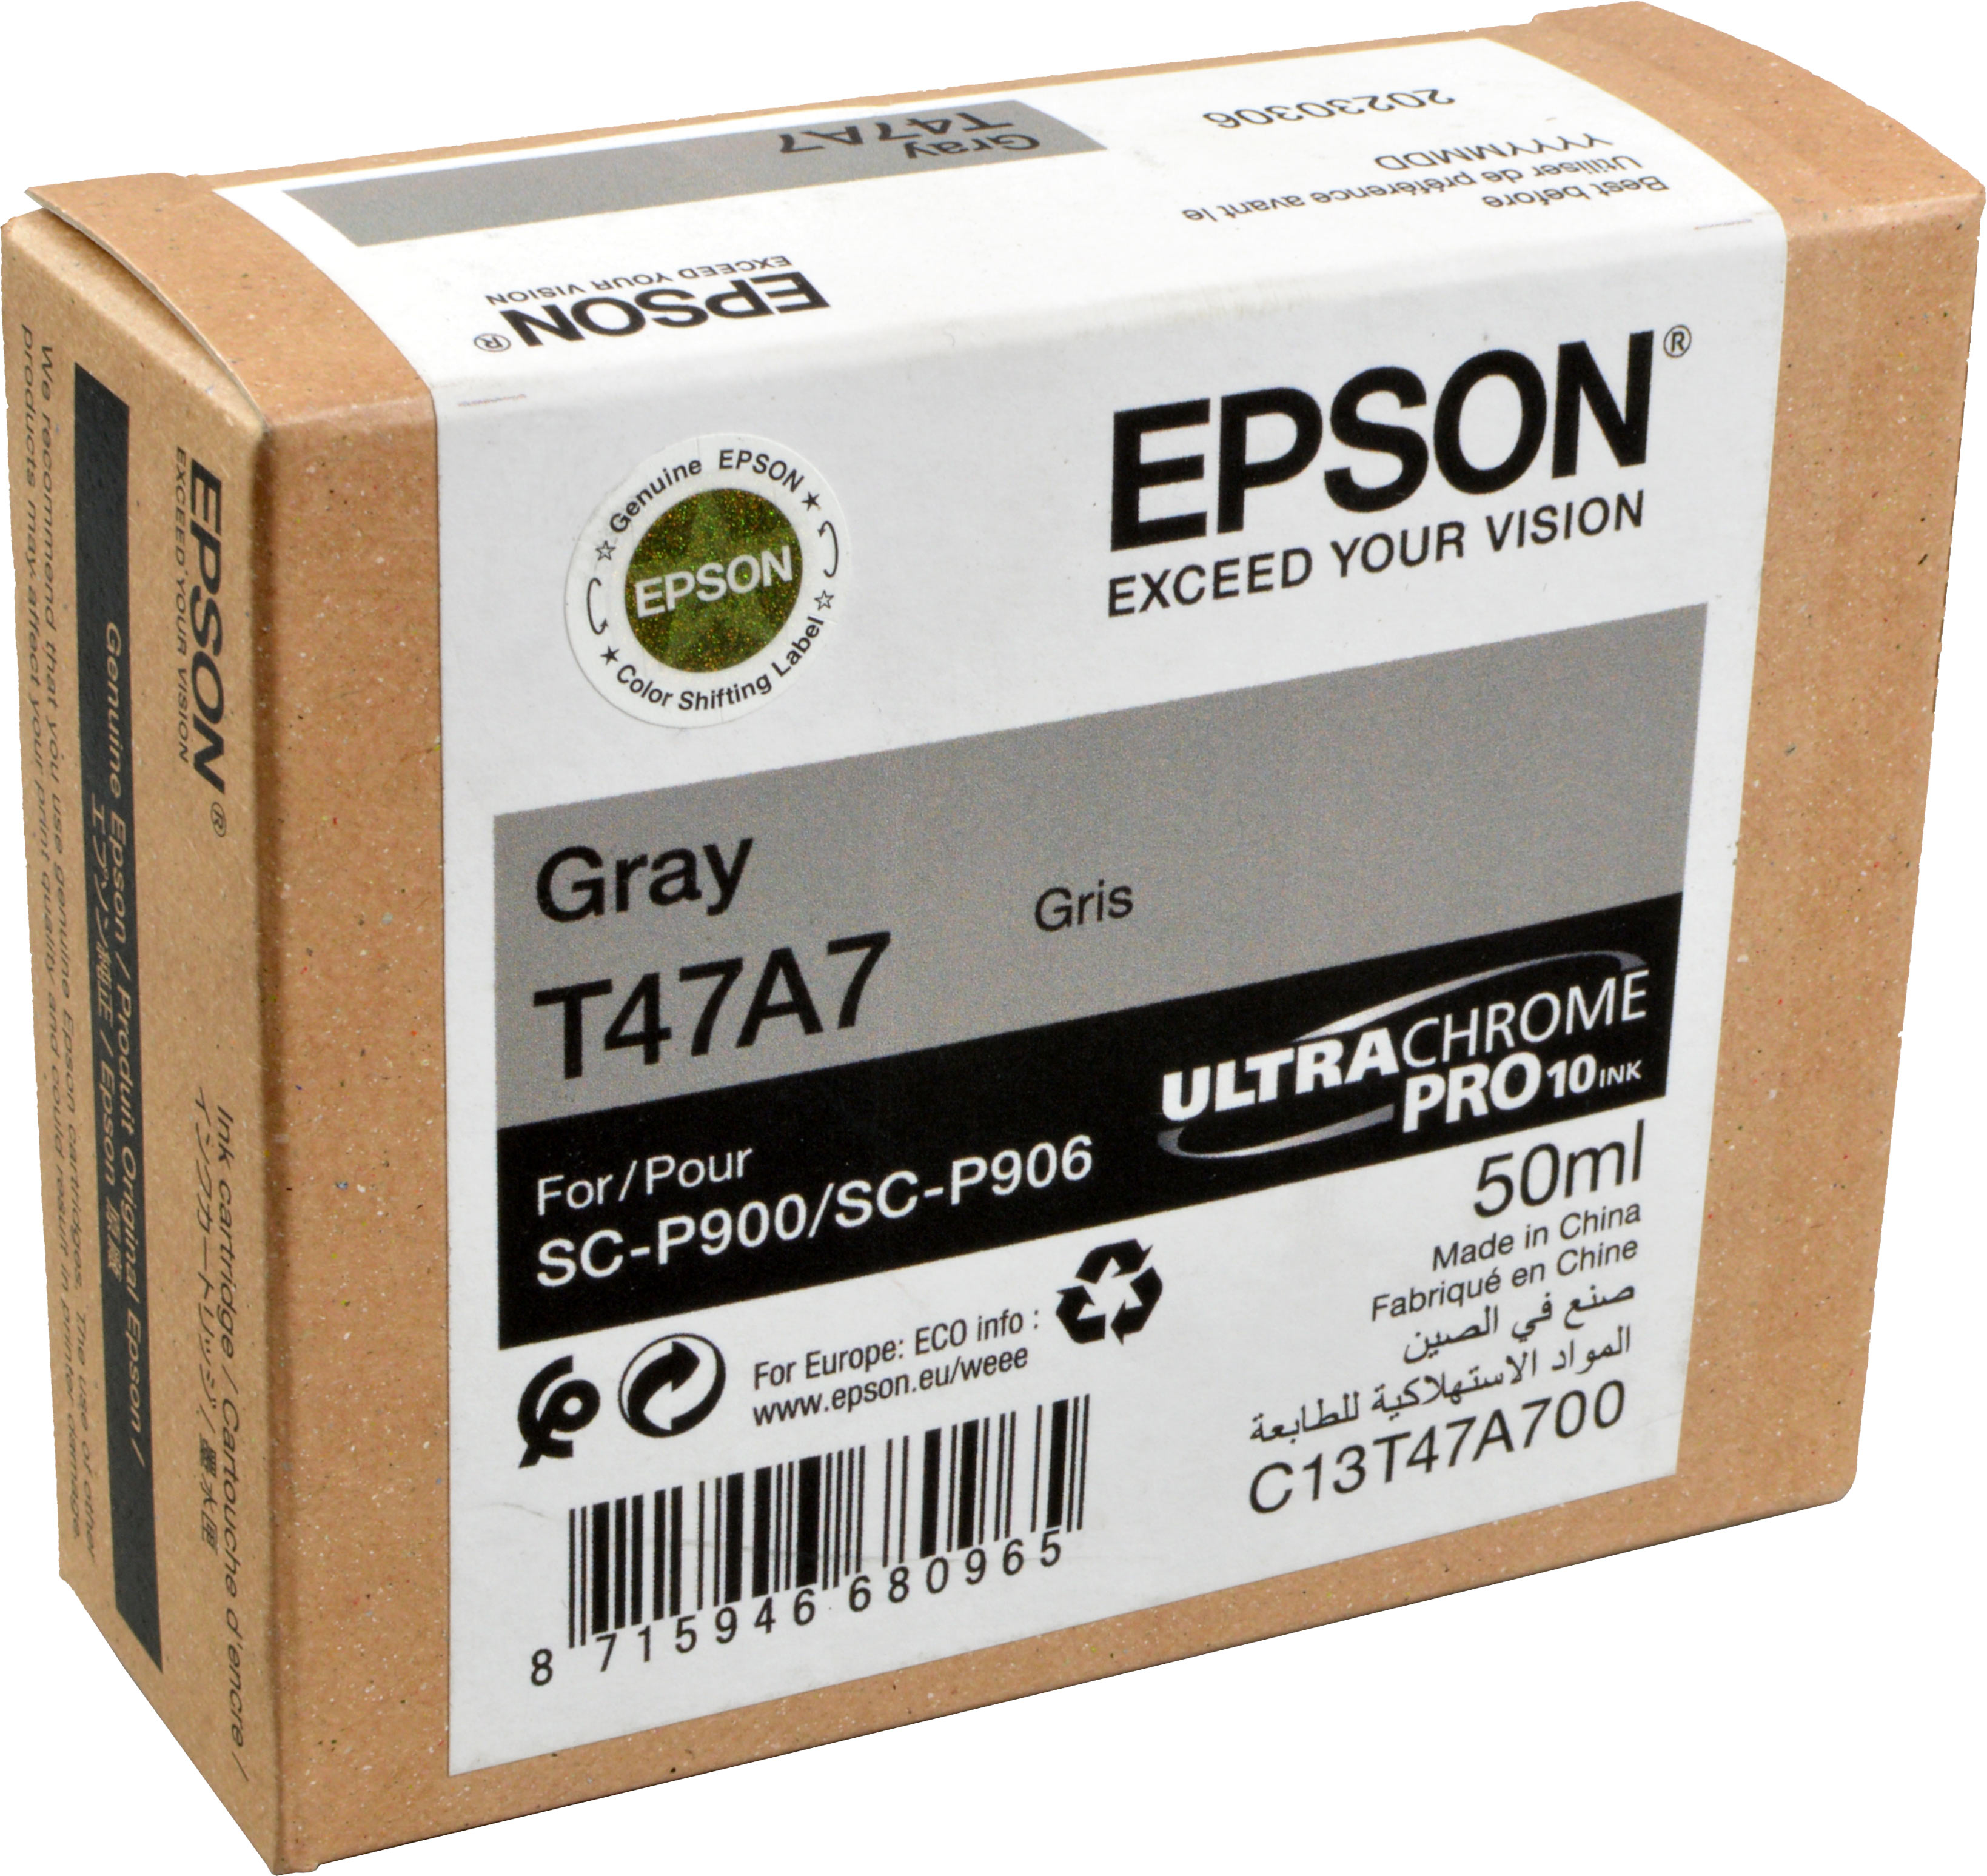 Epson Tinte C13T47A700  T47A7  gray